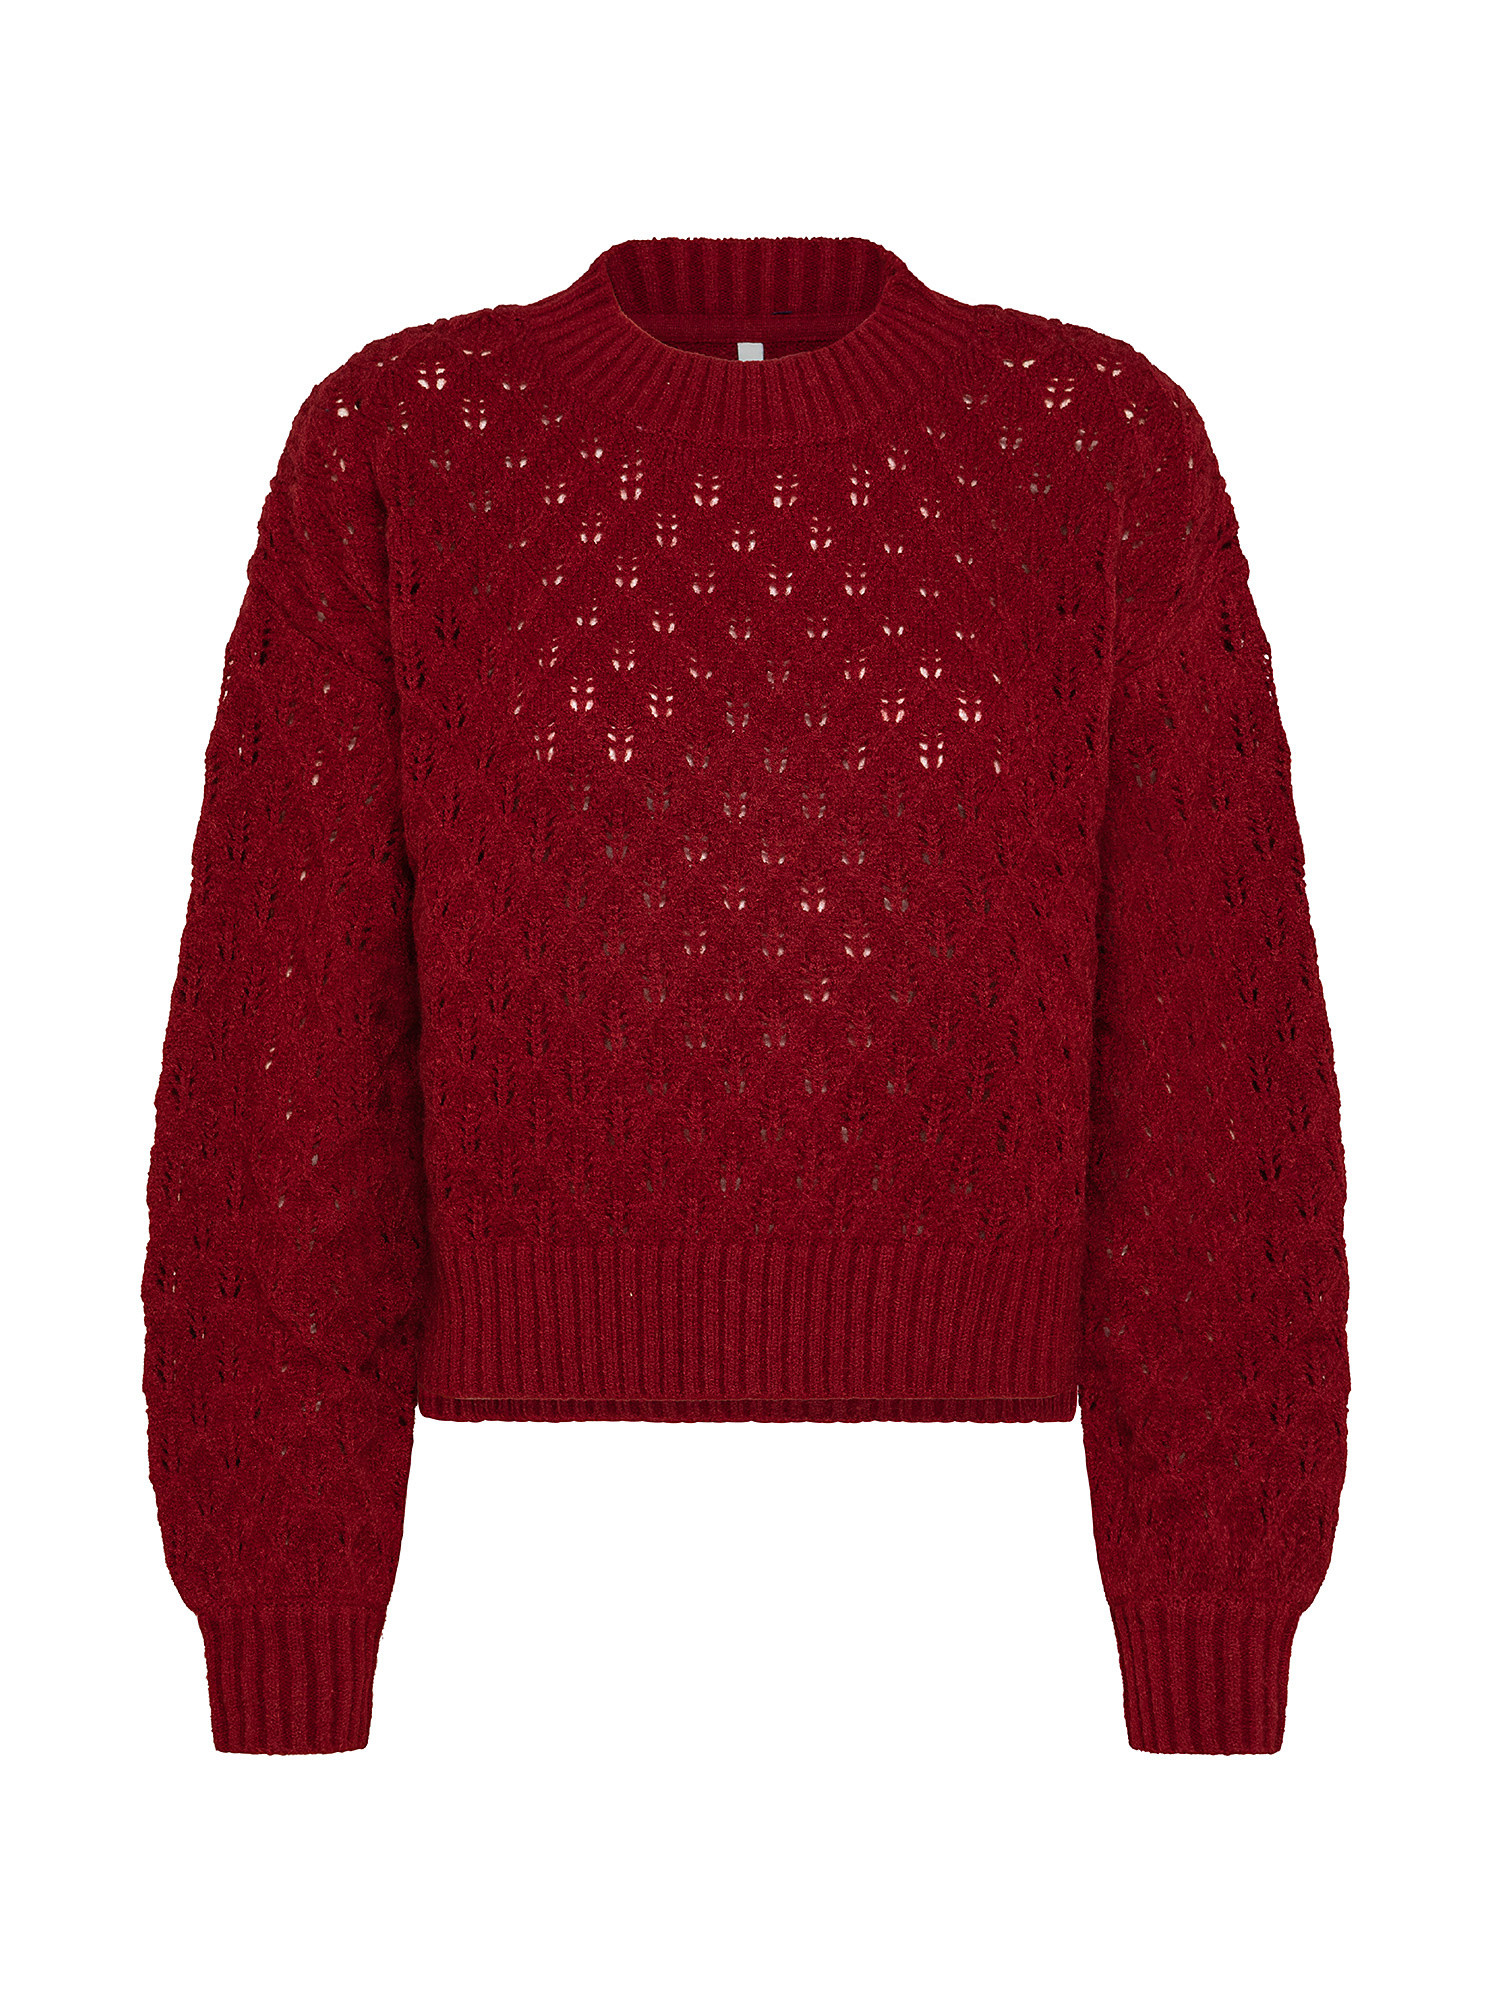 Pullover girocollo Beatrix, Rosso mattone, large image number 0